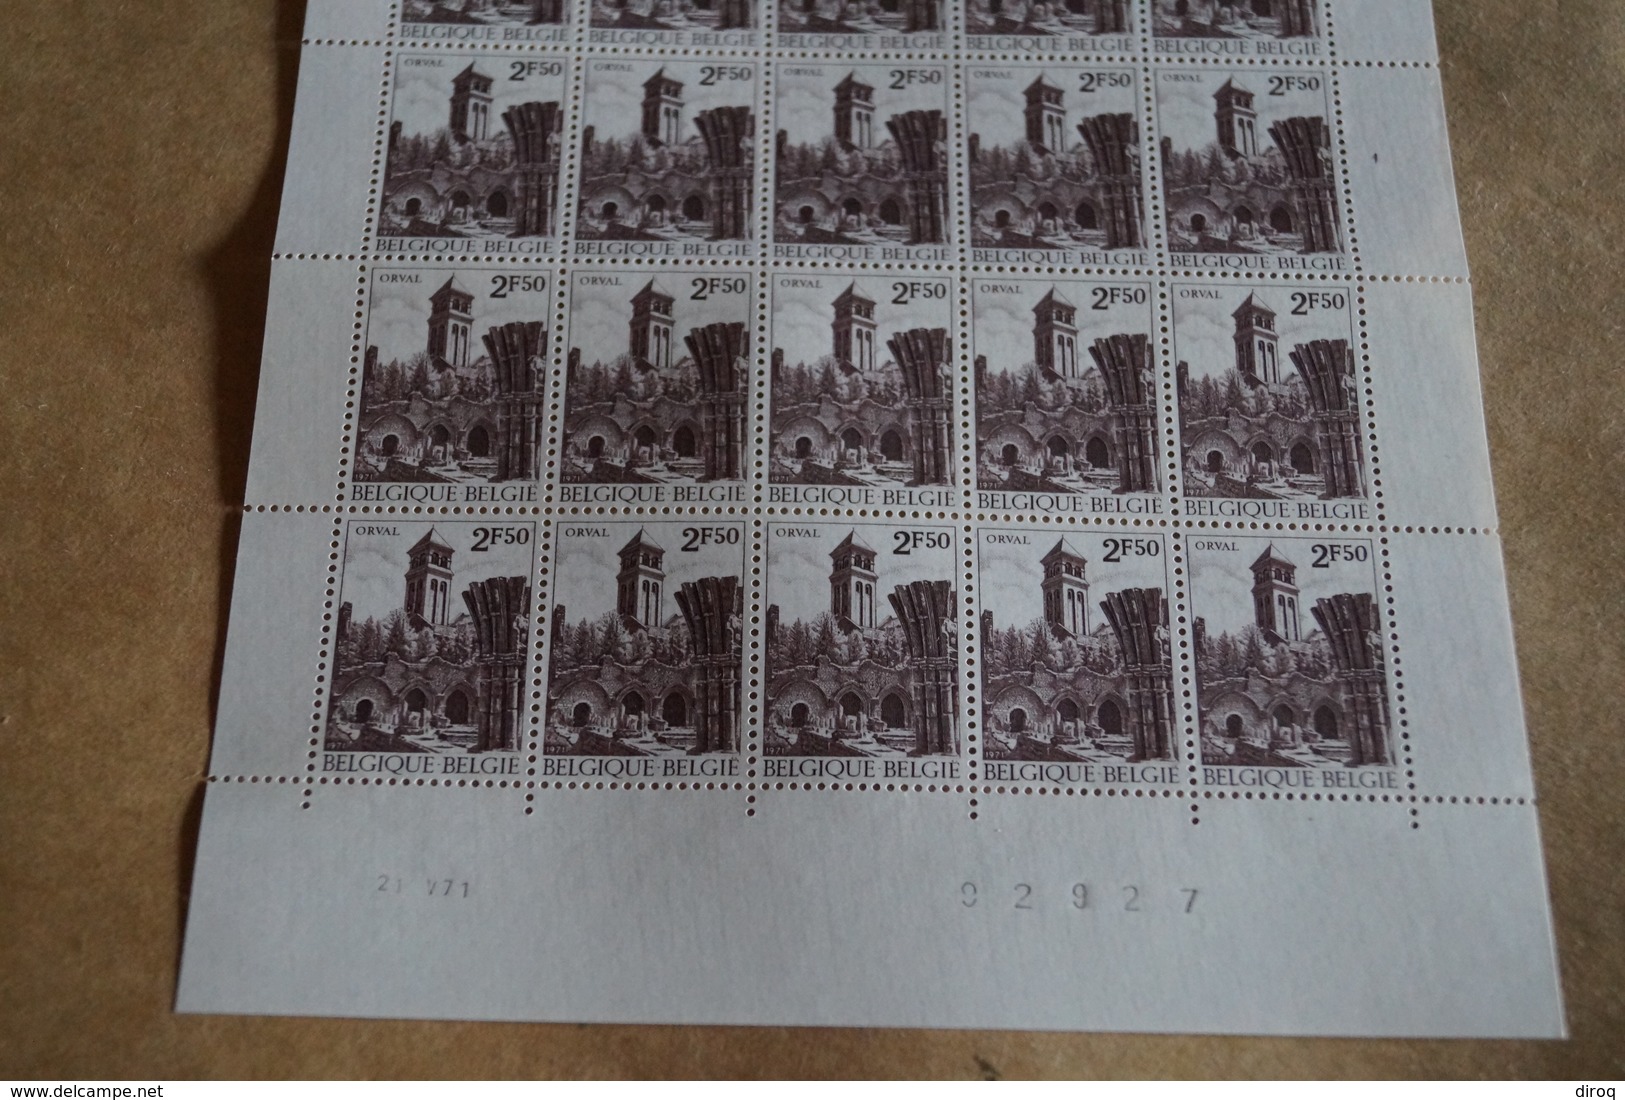 RARE Feuille complète Abbaye d'Orval,30 timbres à 2,50 F.+ livret,1971,strictement neuf avec gomme,collection